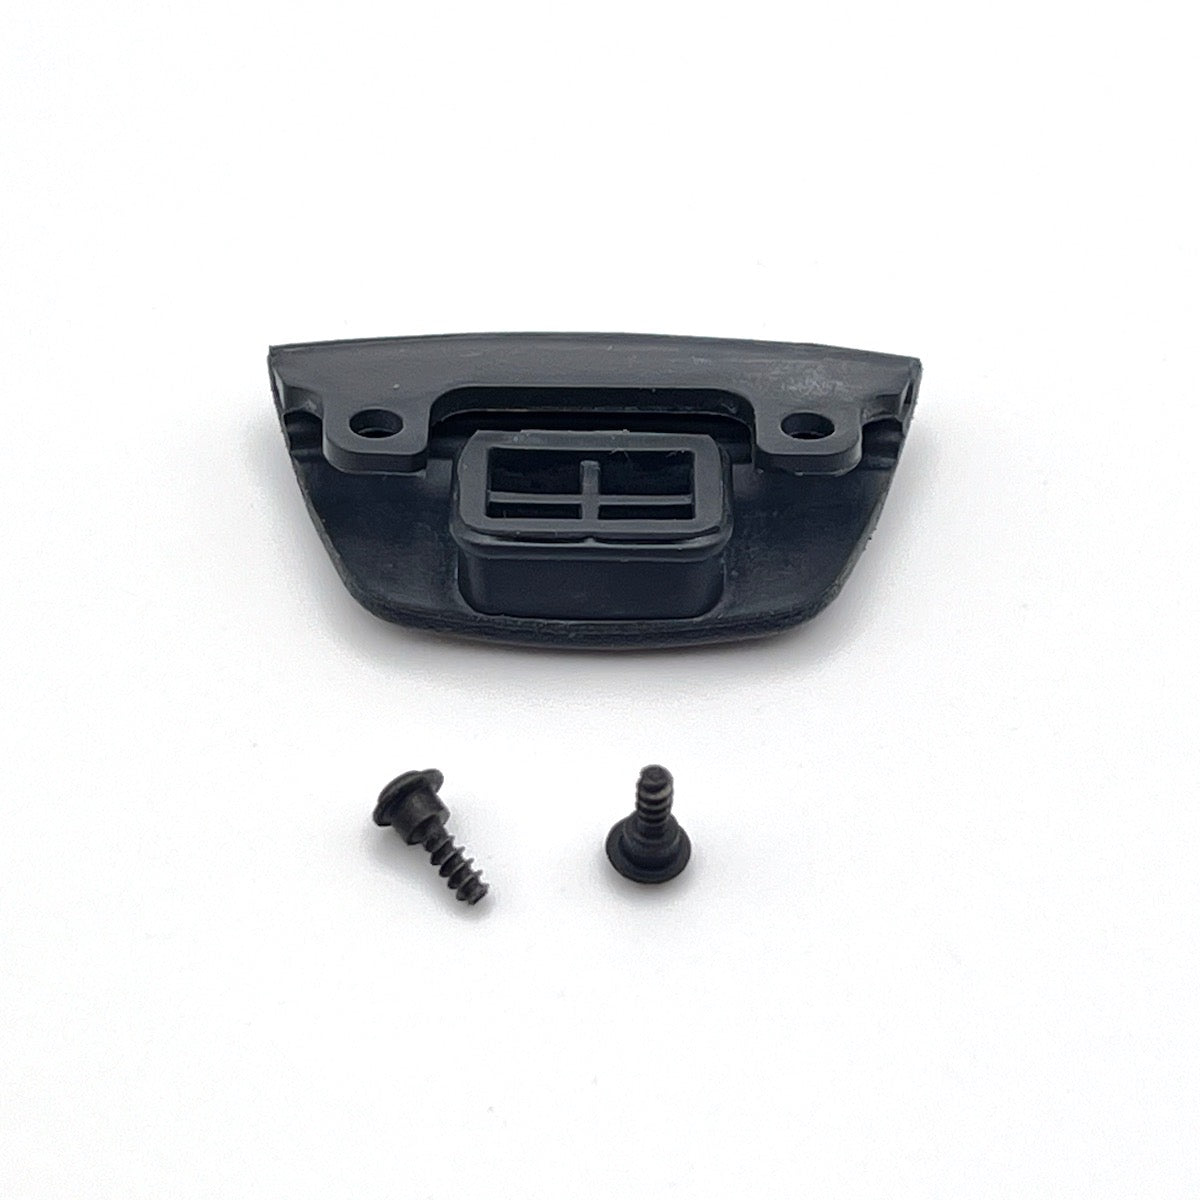 Rubber cap USB Garmin eTrex 10 20 30 part repair rubber